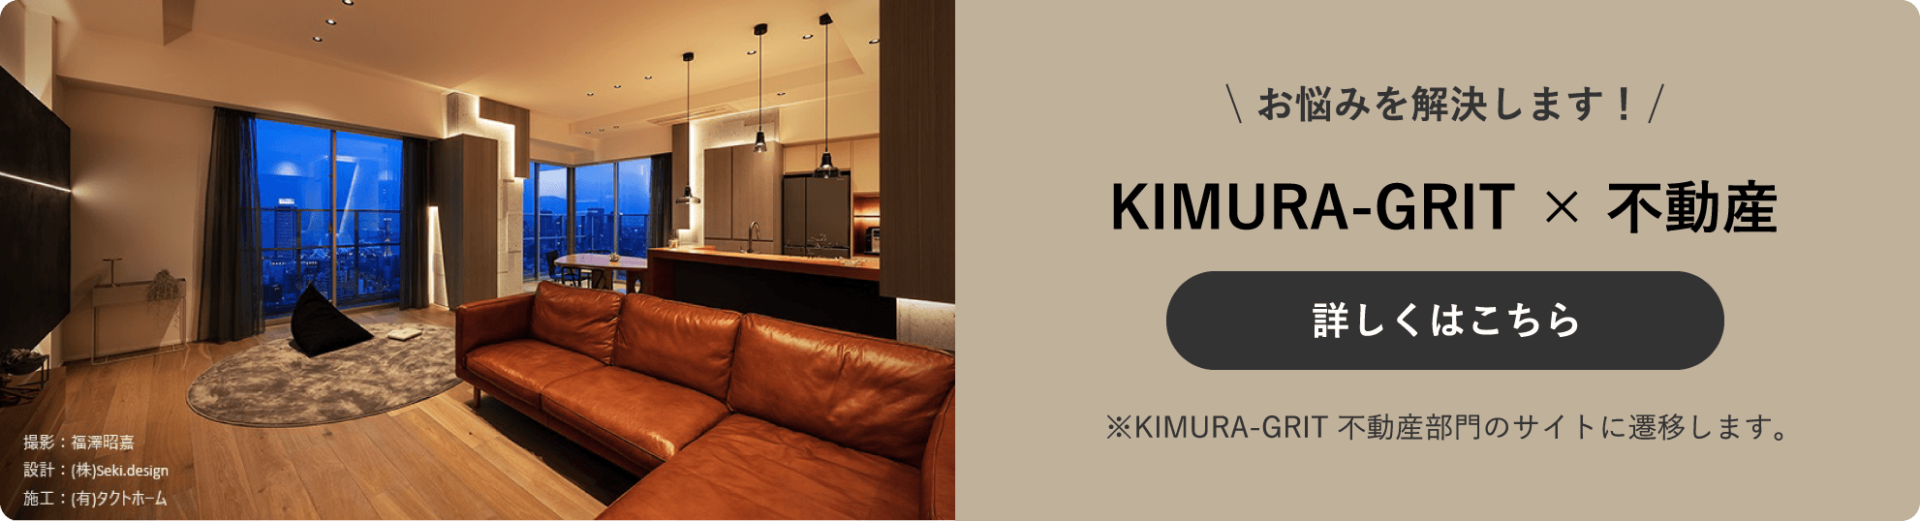 KIMURA-GRIT×不動産 詳しくはこちら